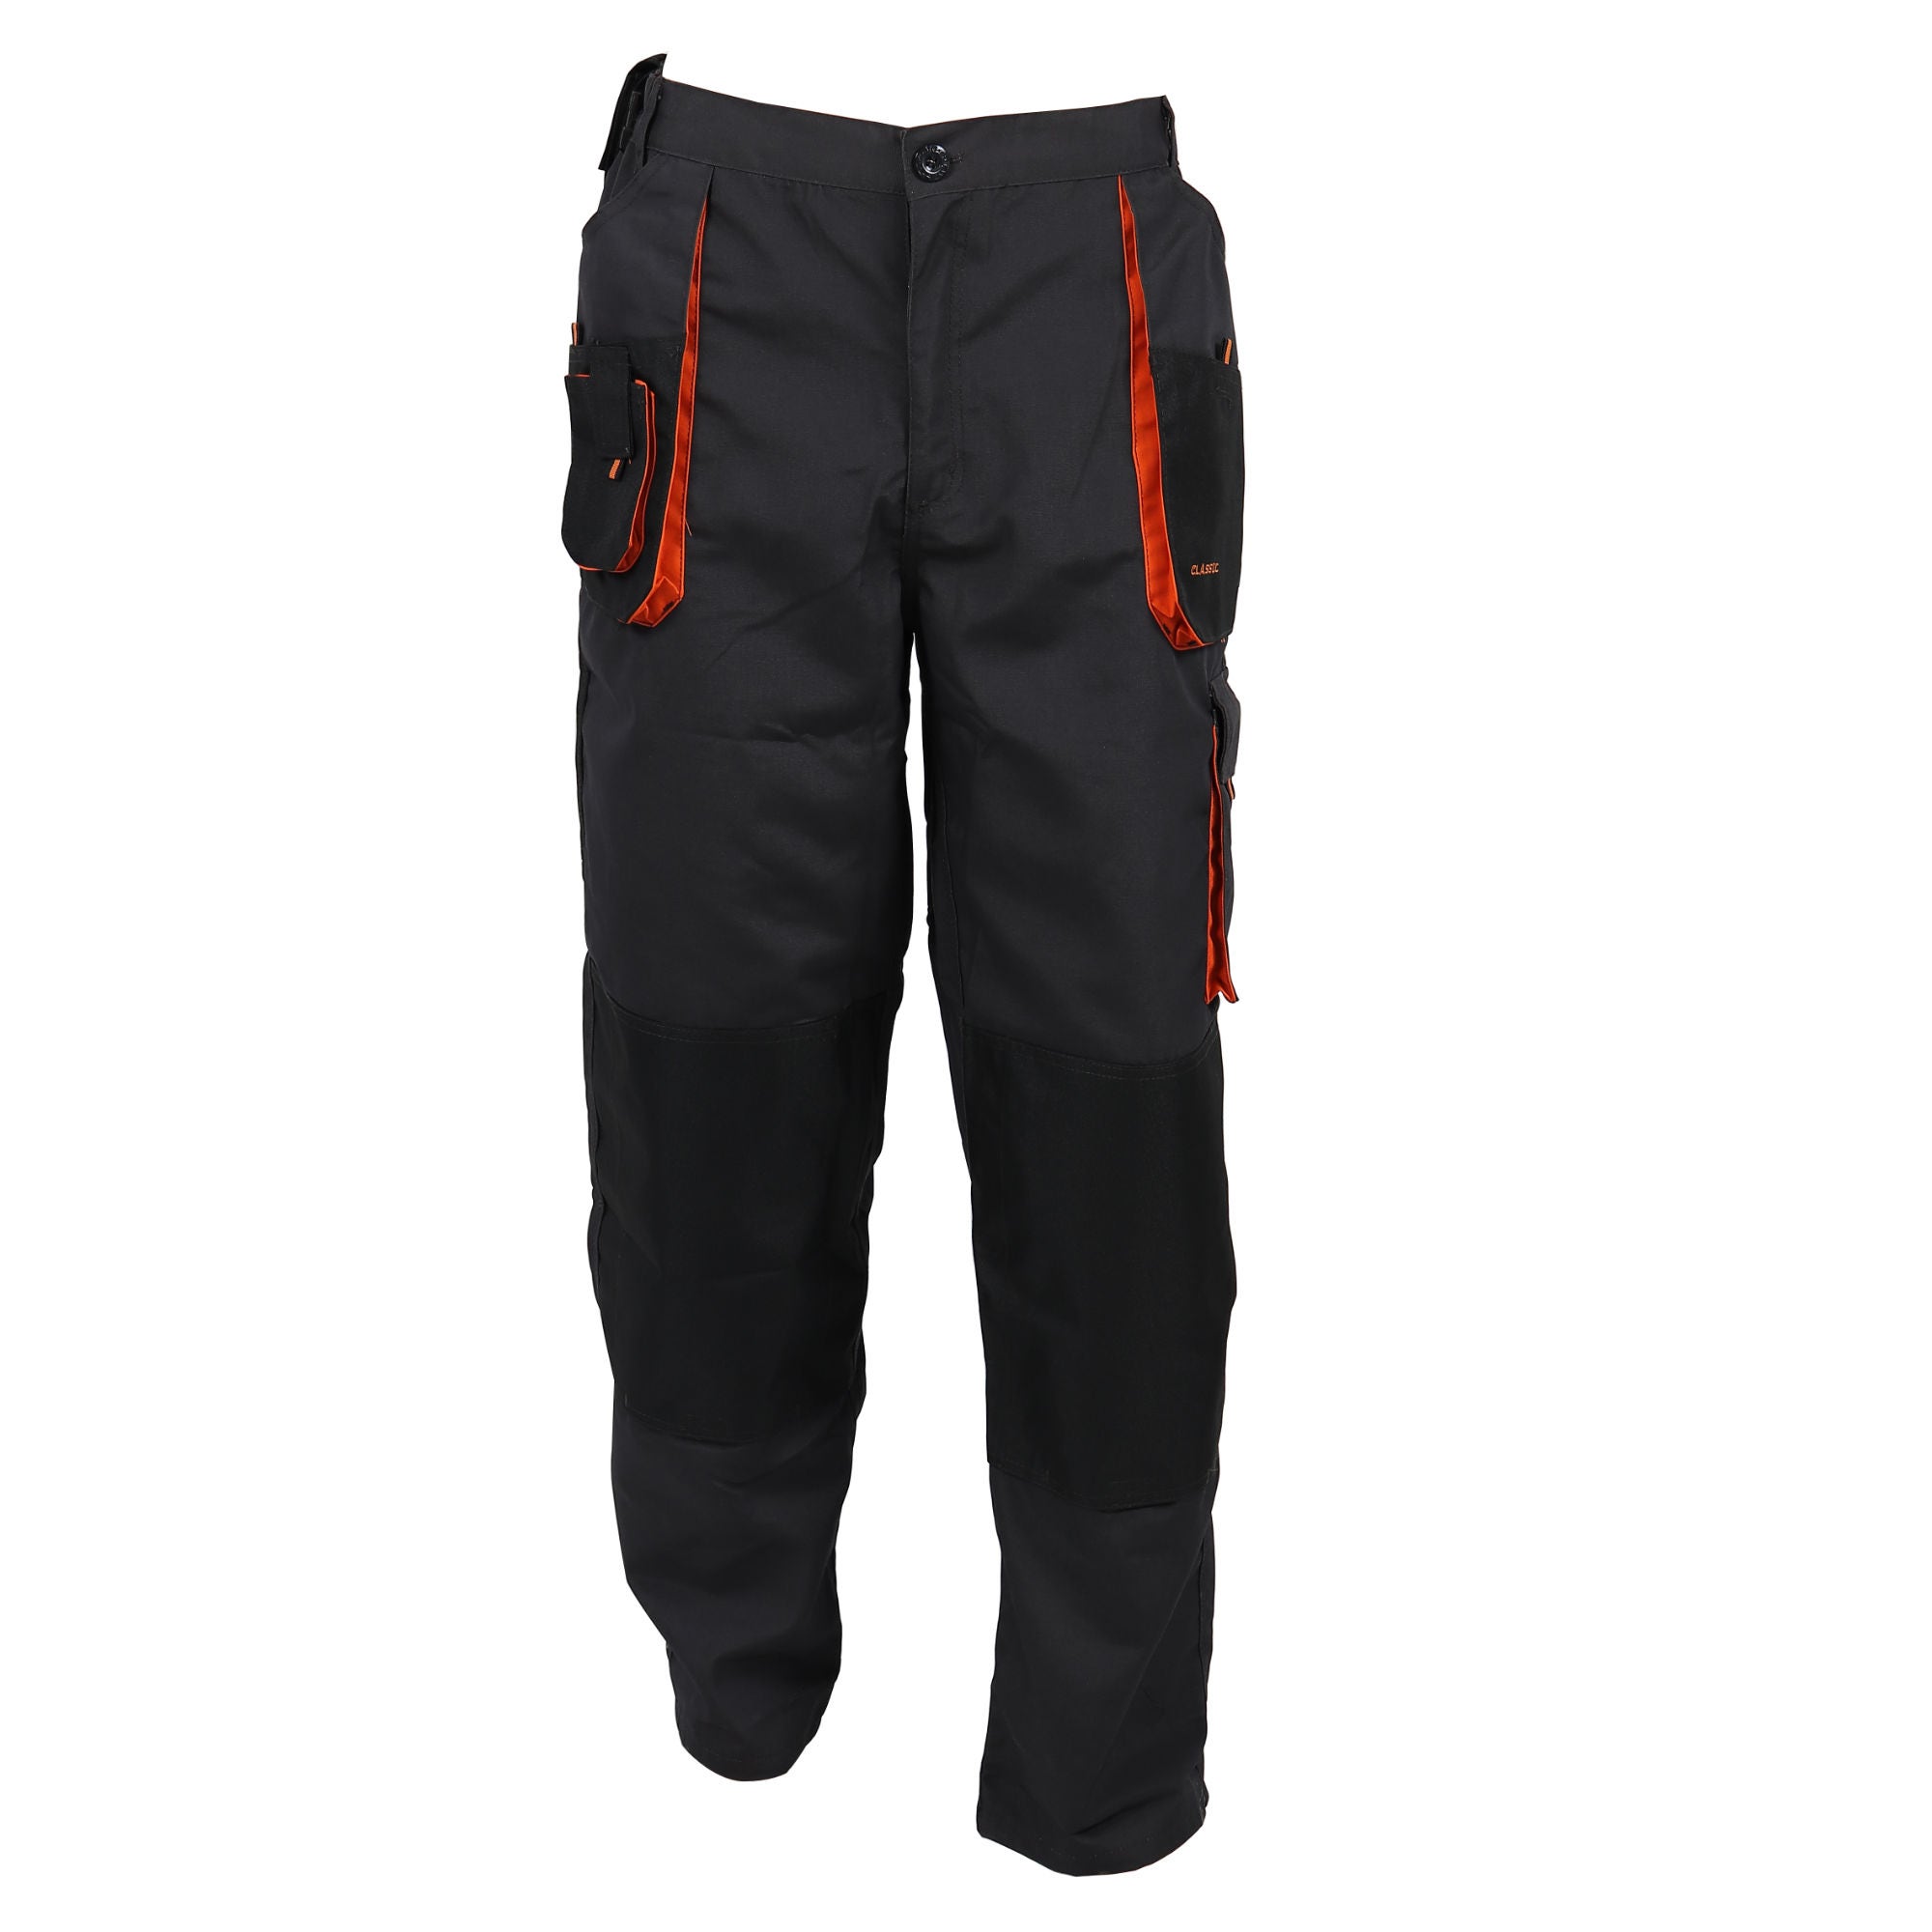 Pantalon Classic Simplu, tercot, poliester + bumbac, gri inchis + negru + portocaliu, marimea 52